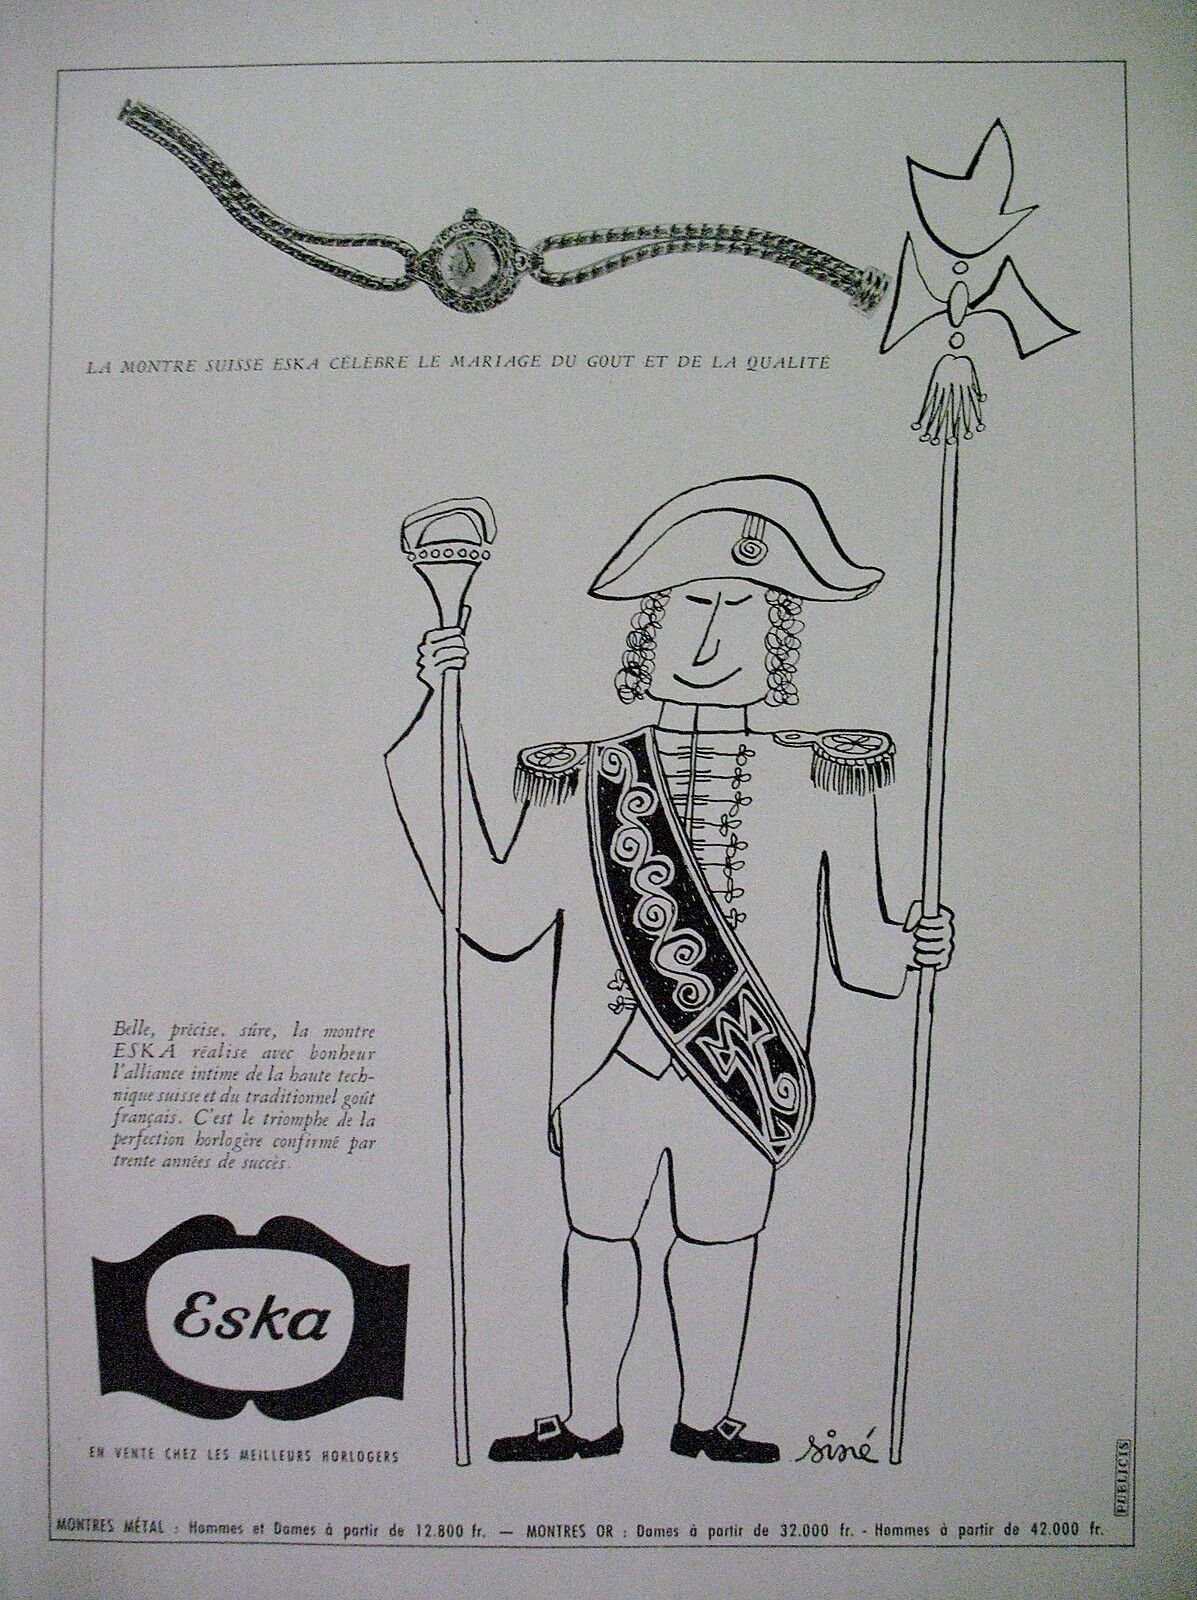 ESKA PRESS ADVERTISEMENT WATCH ILLUSTRATOR SINE FRENCH AD 1948